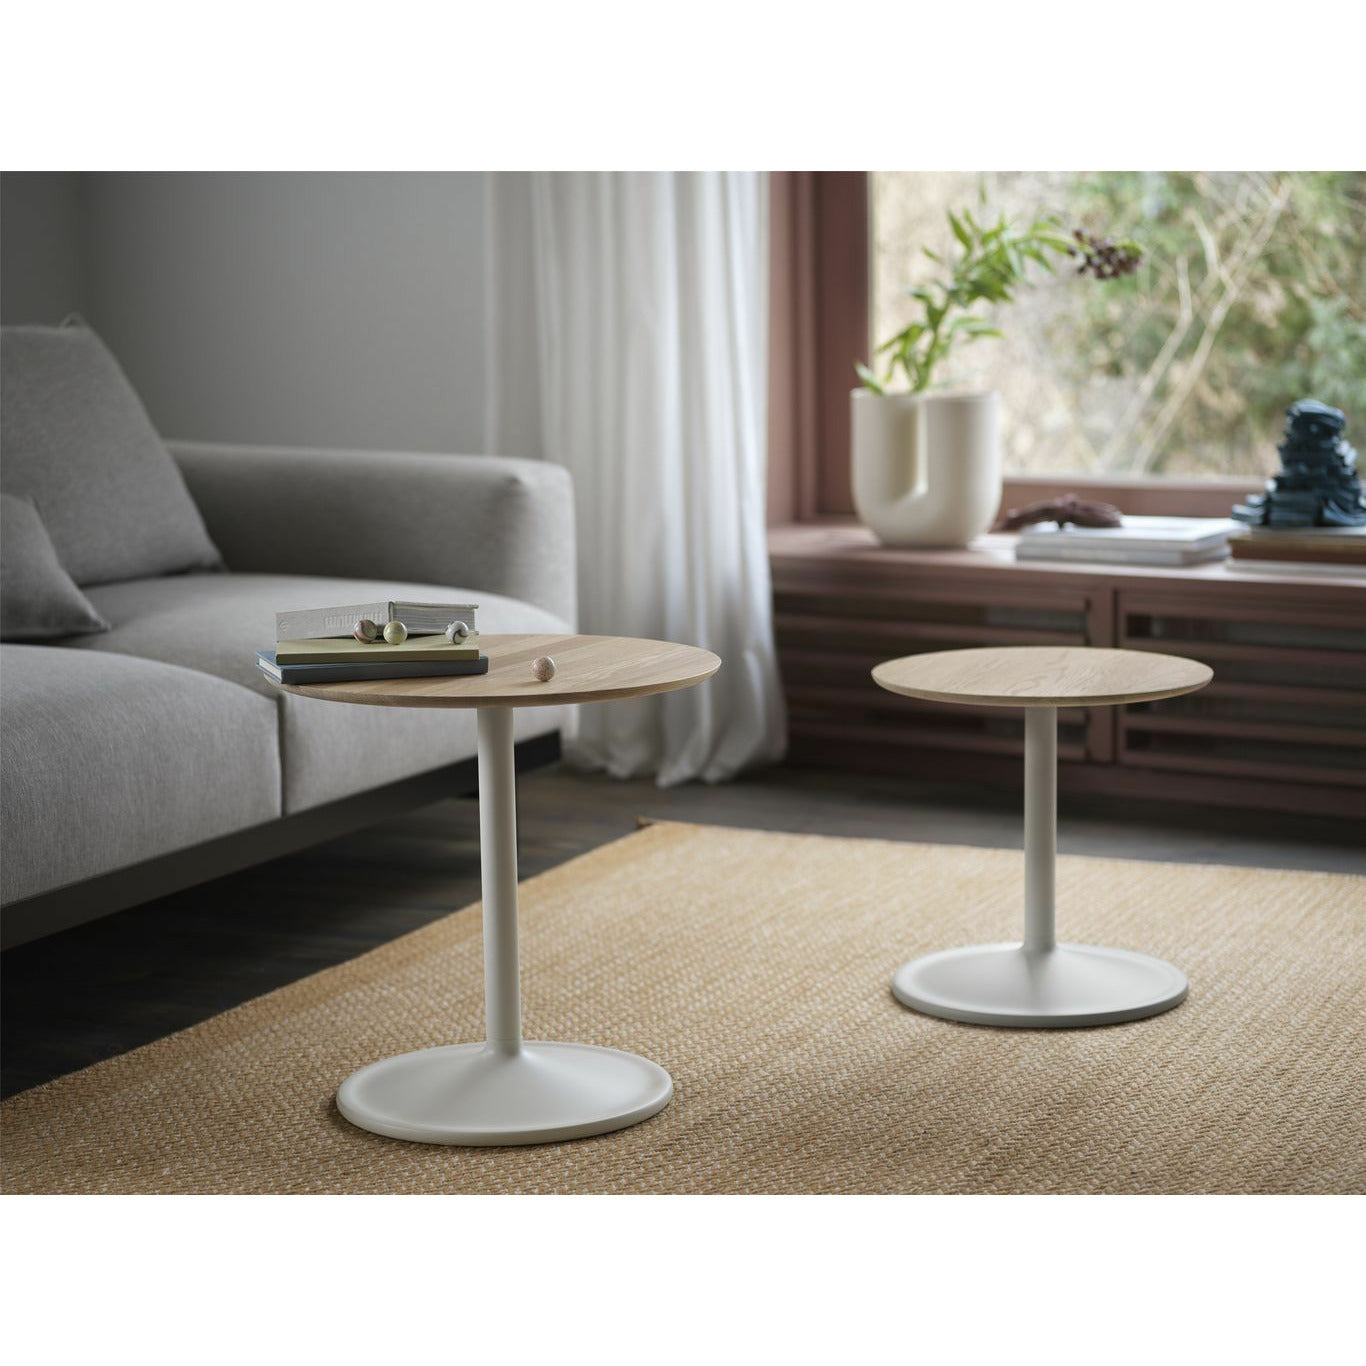 Muuto Soft Table Side Øx H 41x48 cm, roble sólido/apagado blanco